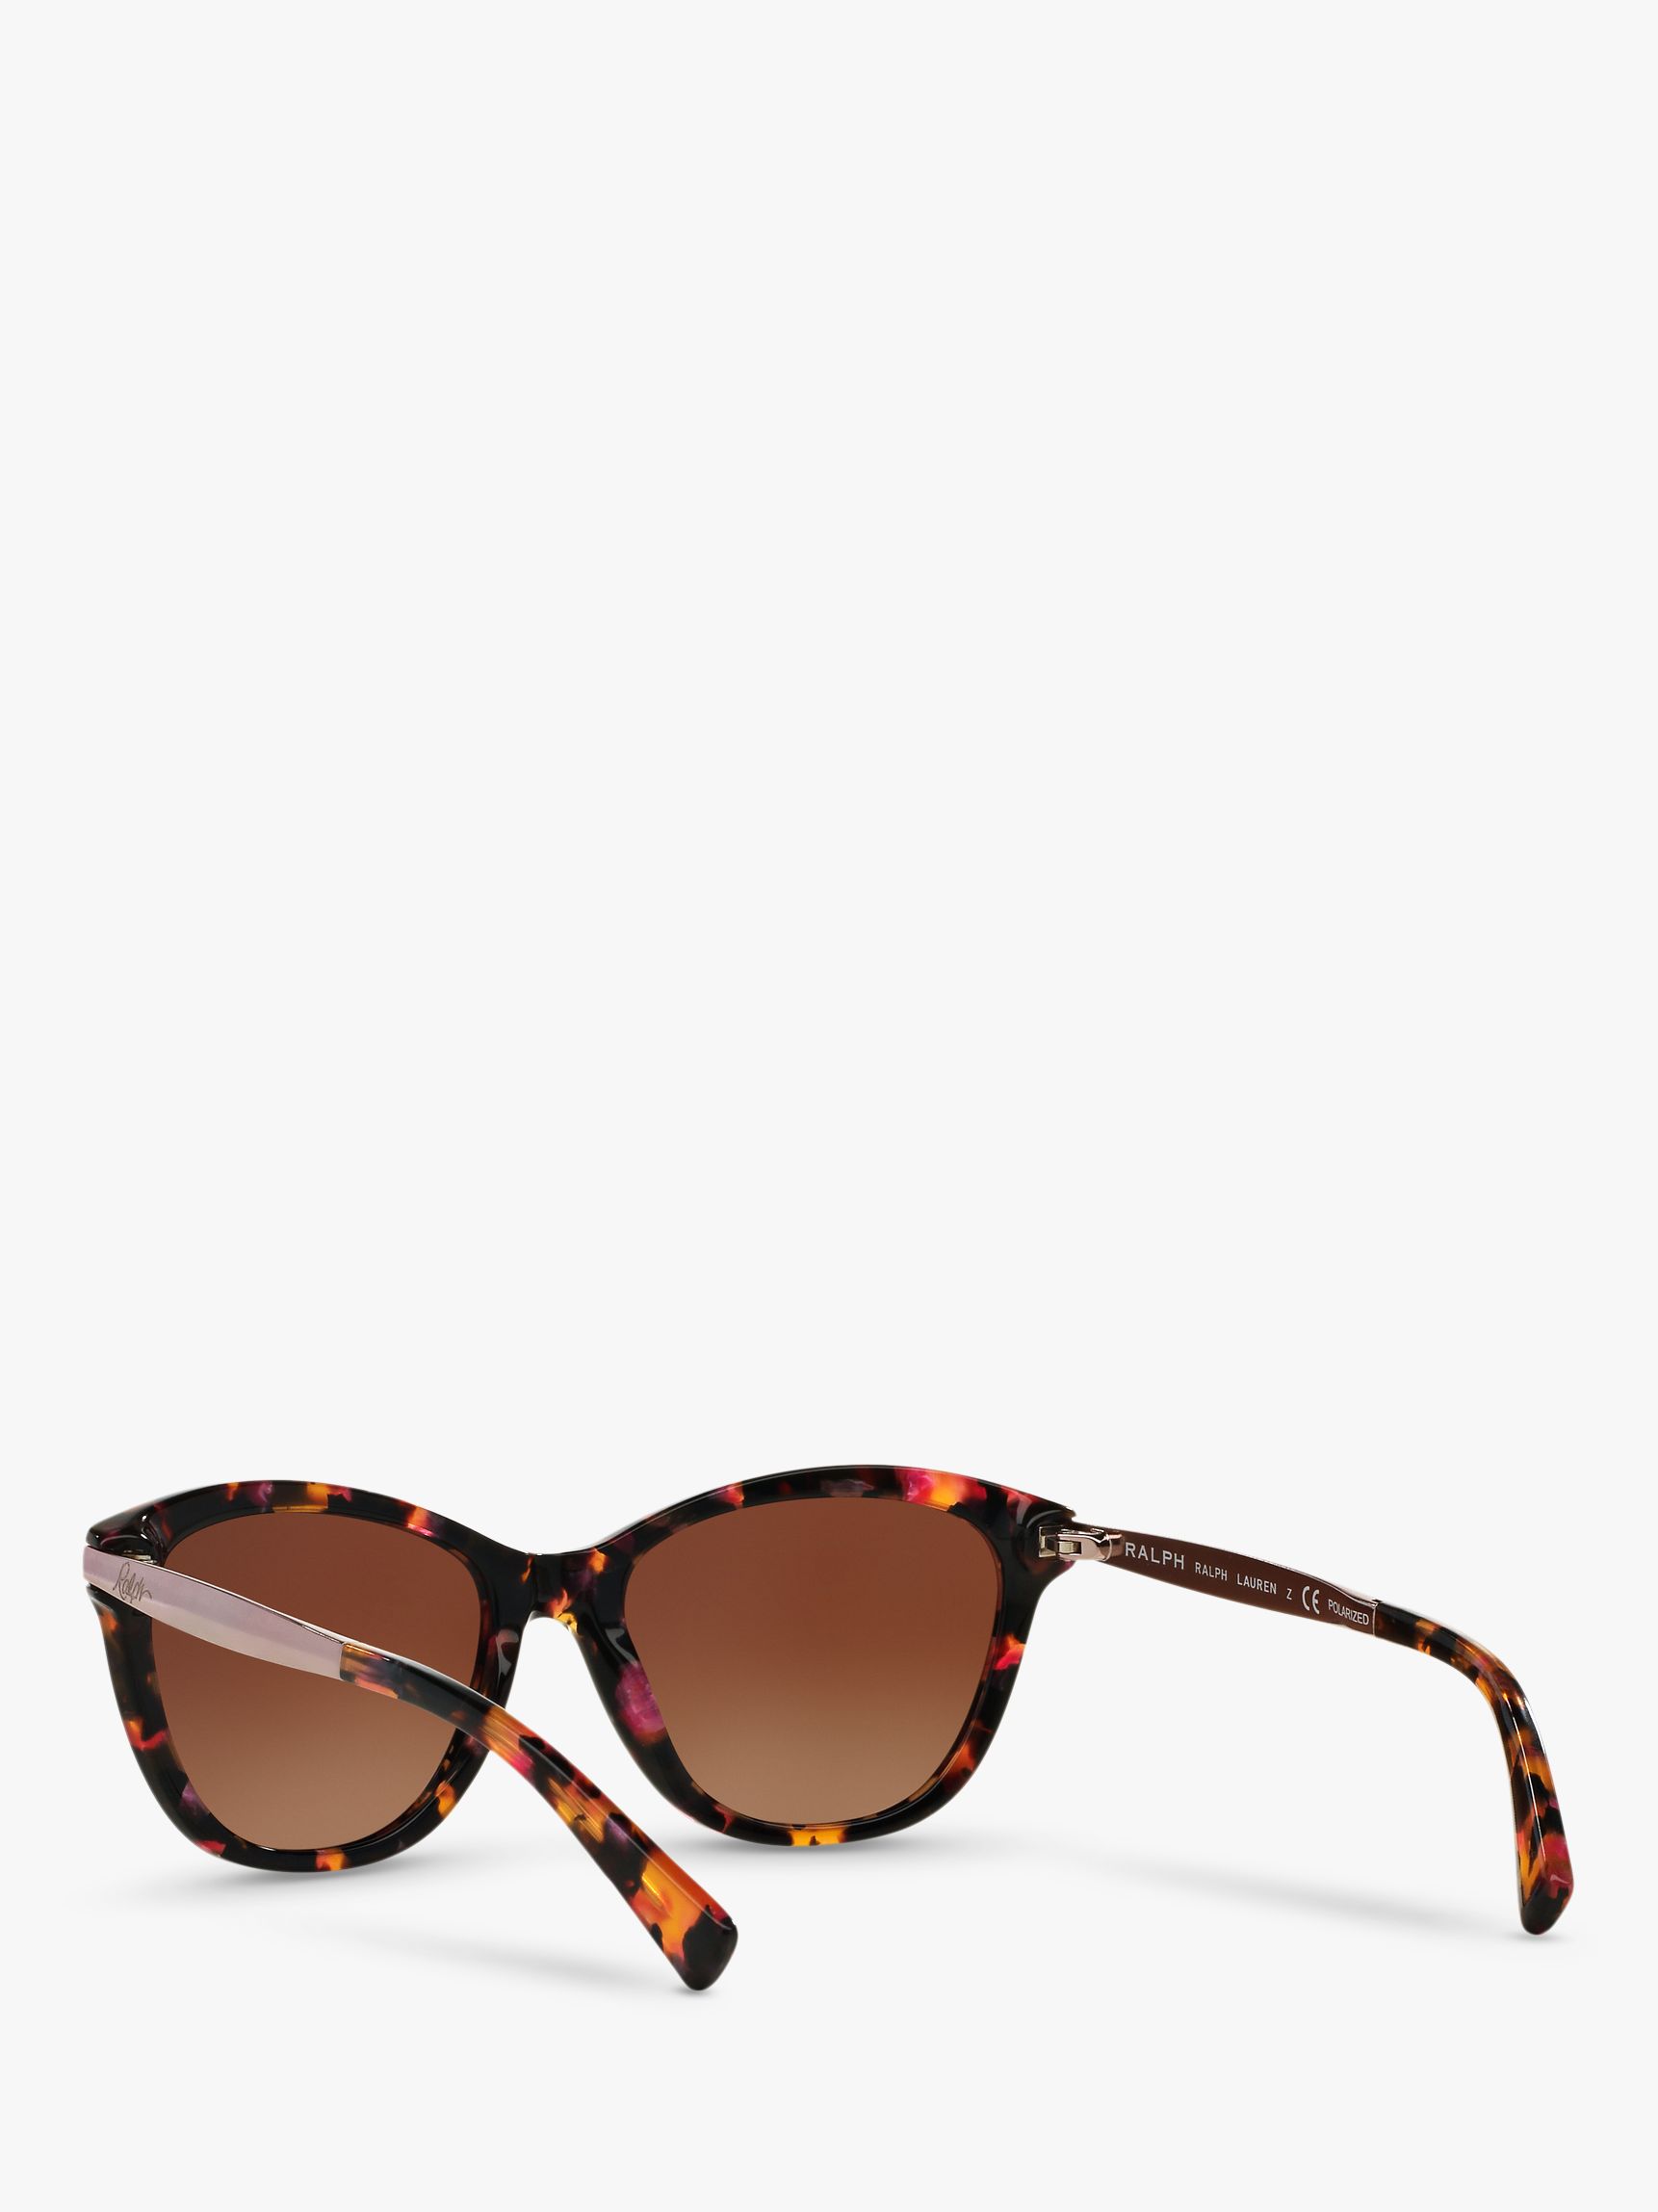 Ralph RA5201 Polarised Cat's Eye Sunglasses, Pink Tortoise/Brown Gradient